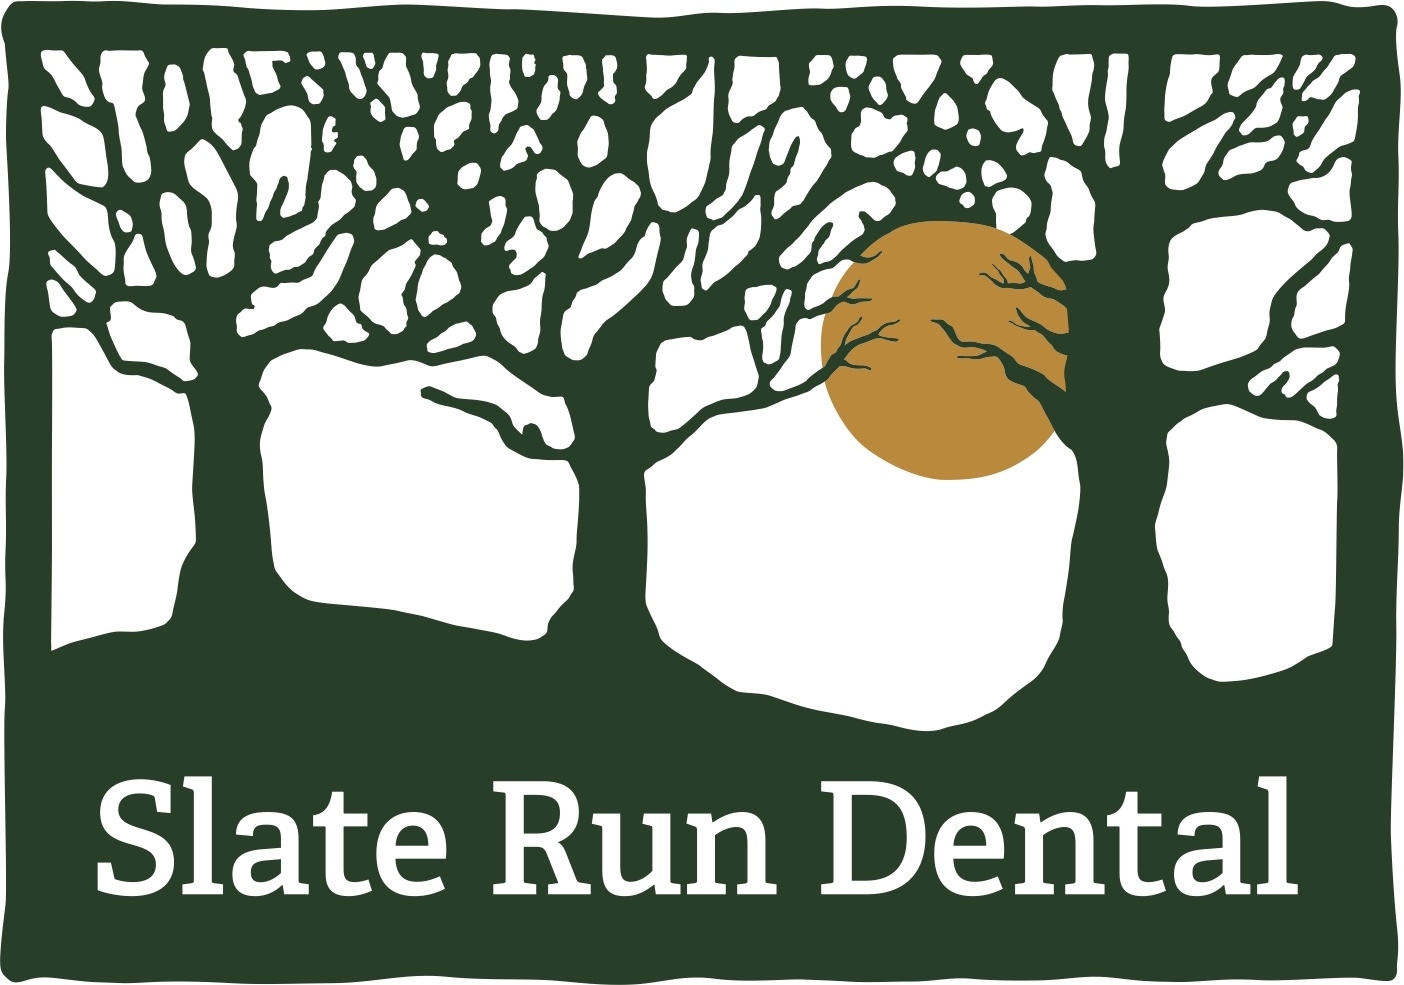 Slate Run Dental